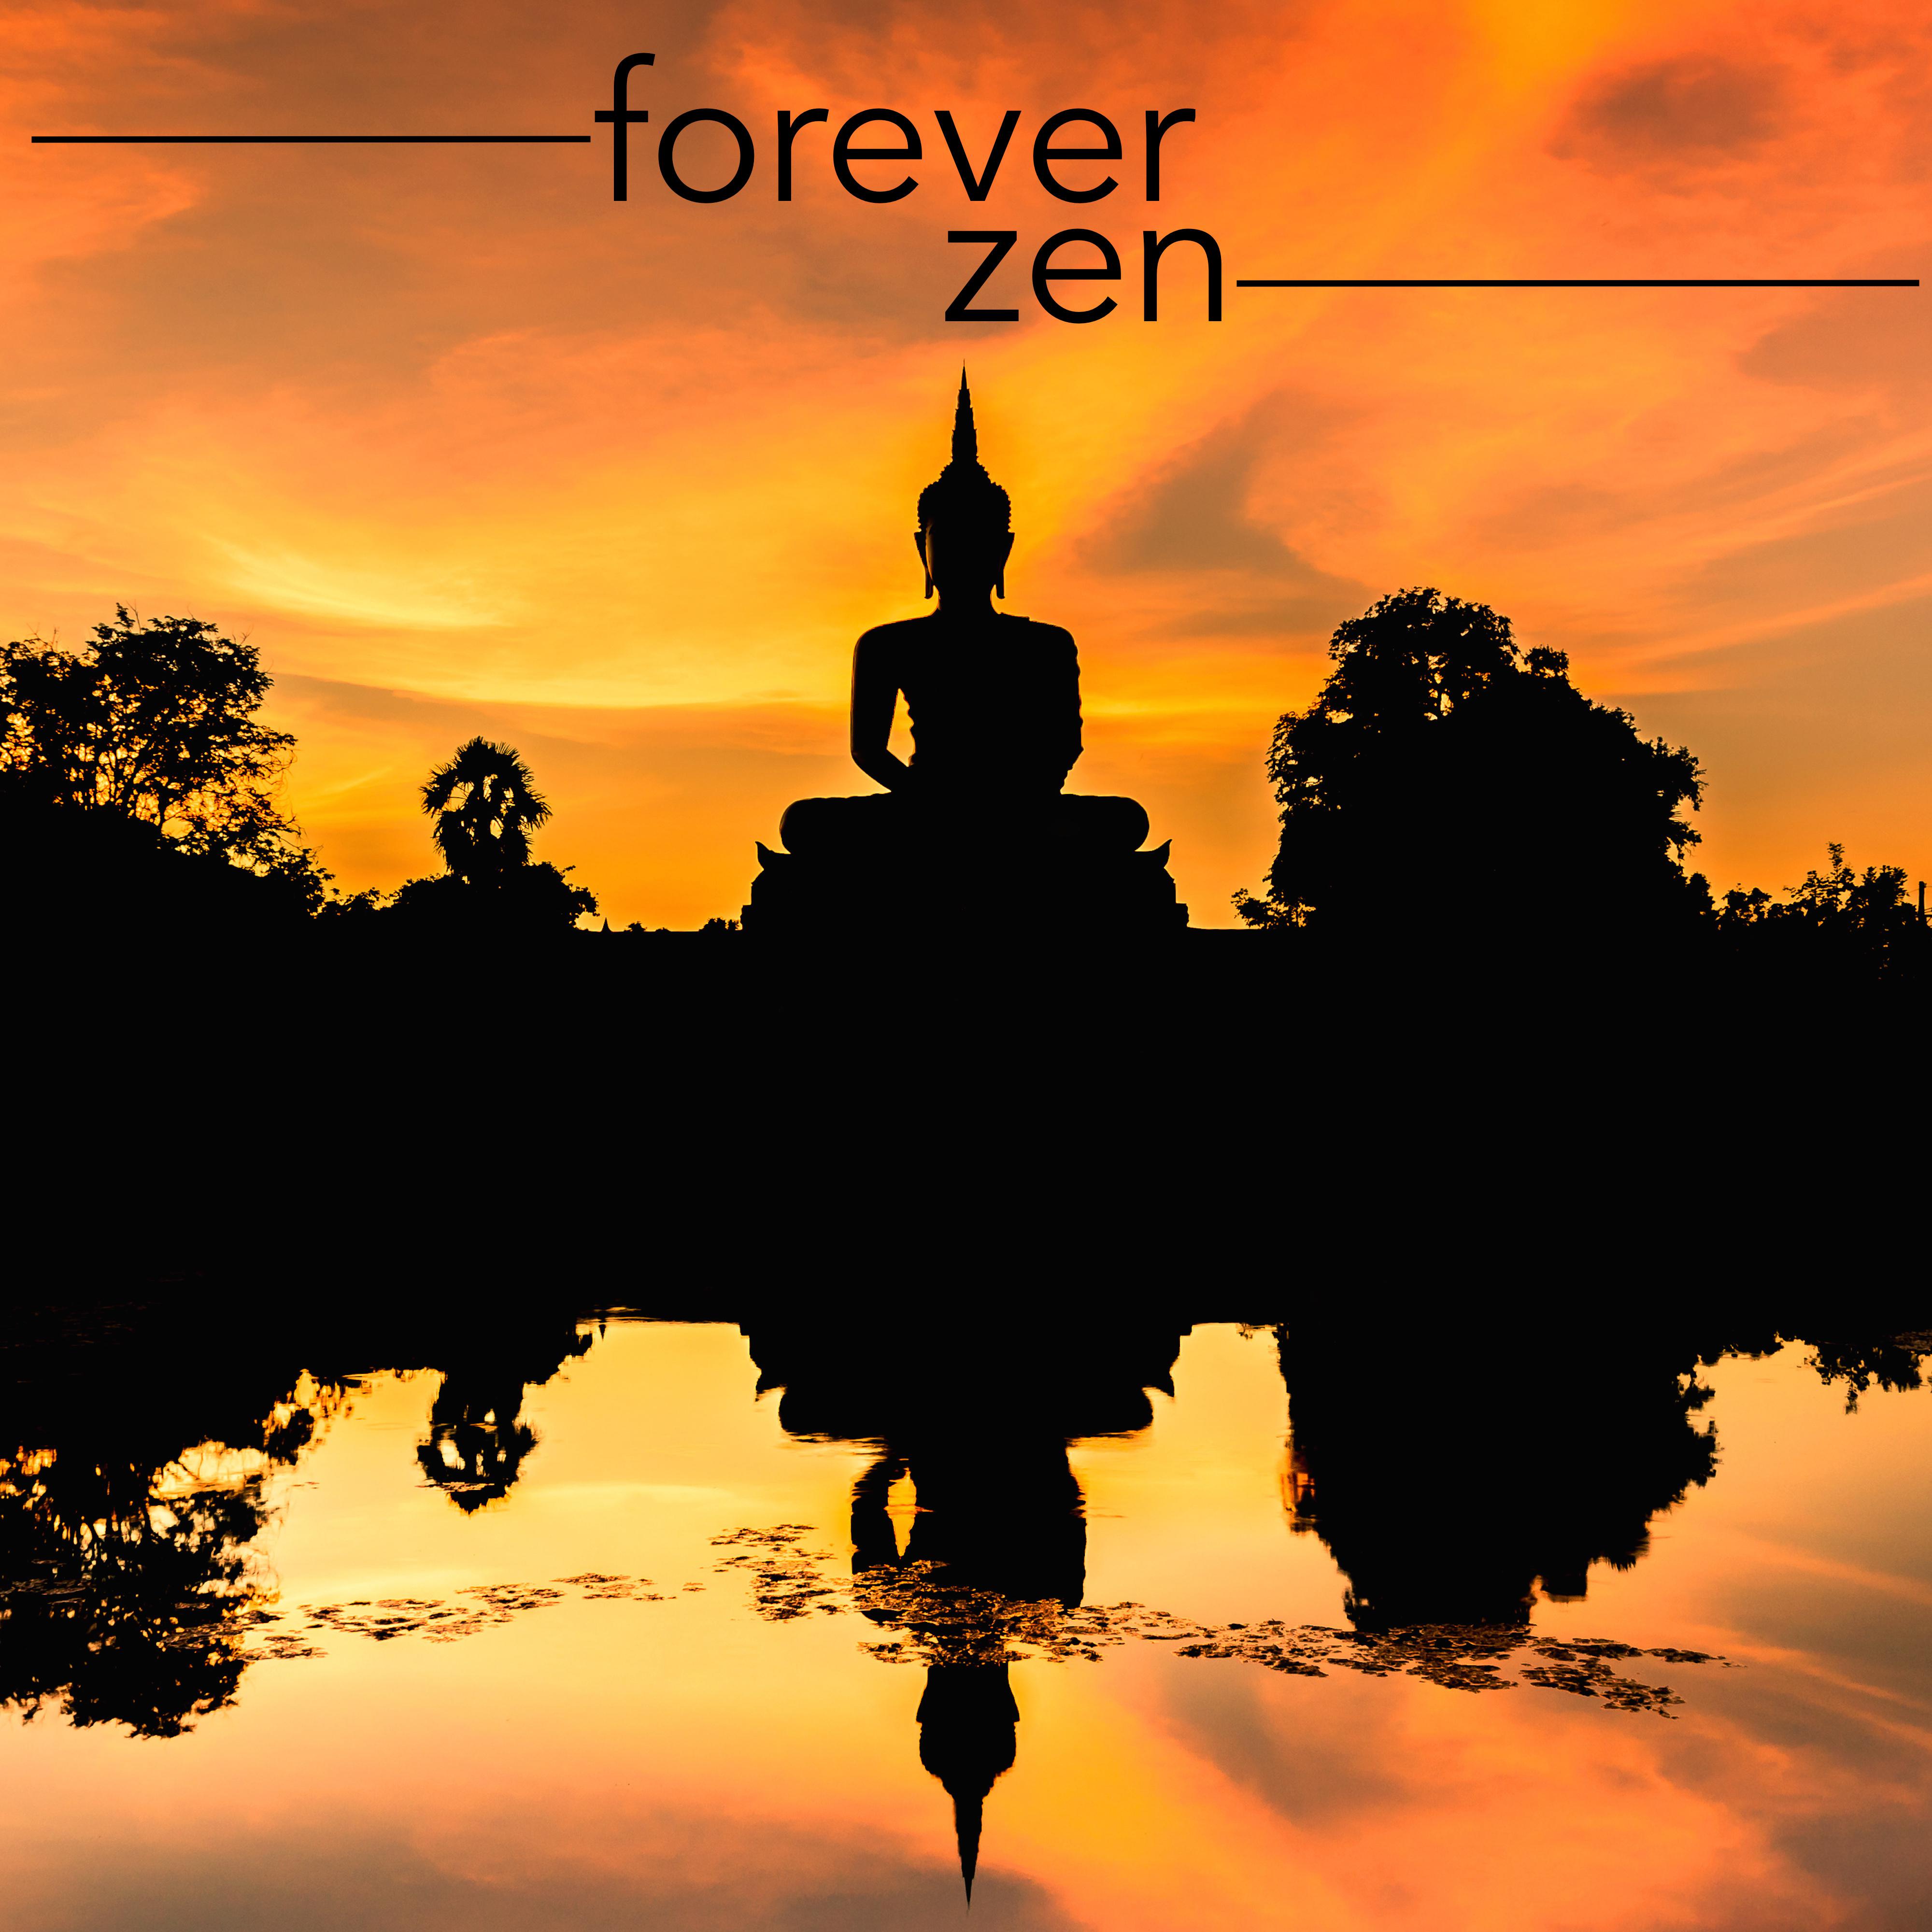 Forever Zen - Spiritual Meditation Music for Enlightenment, Peace and Serenity